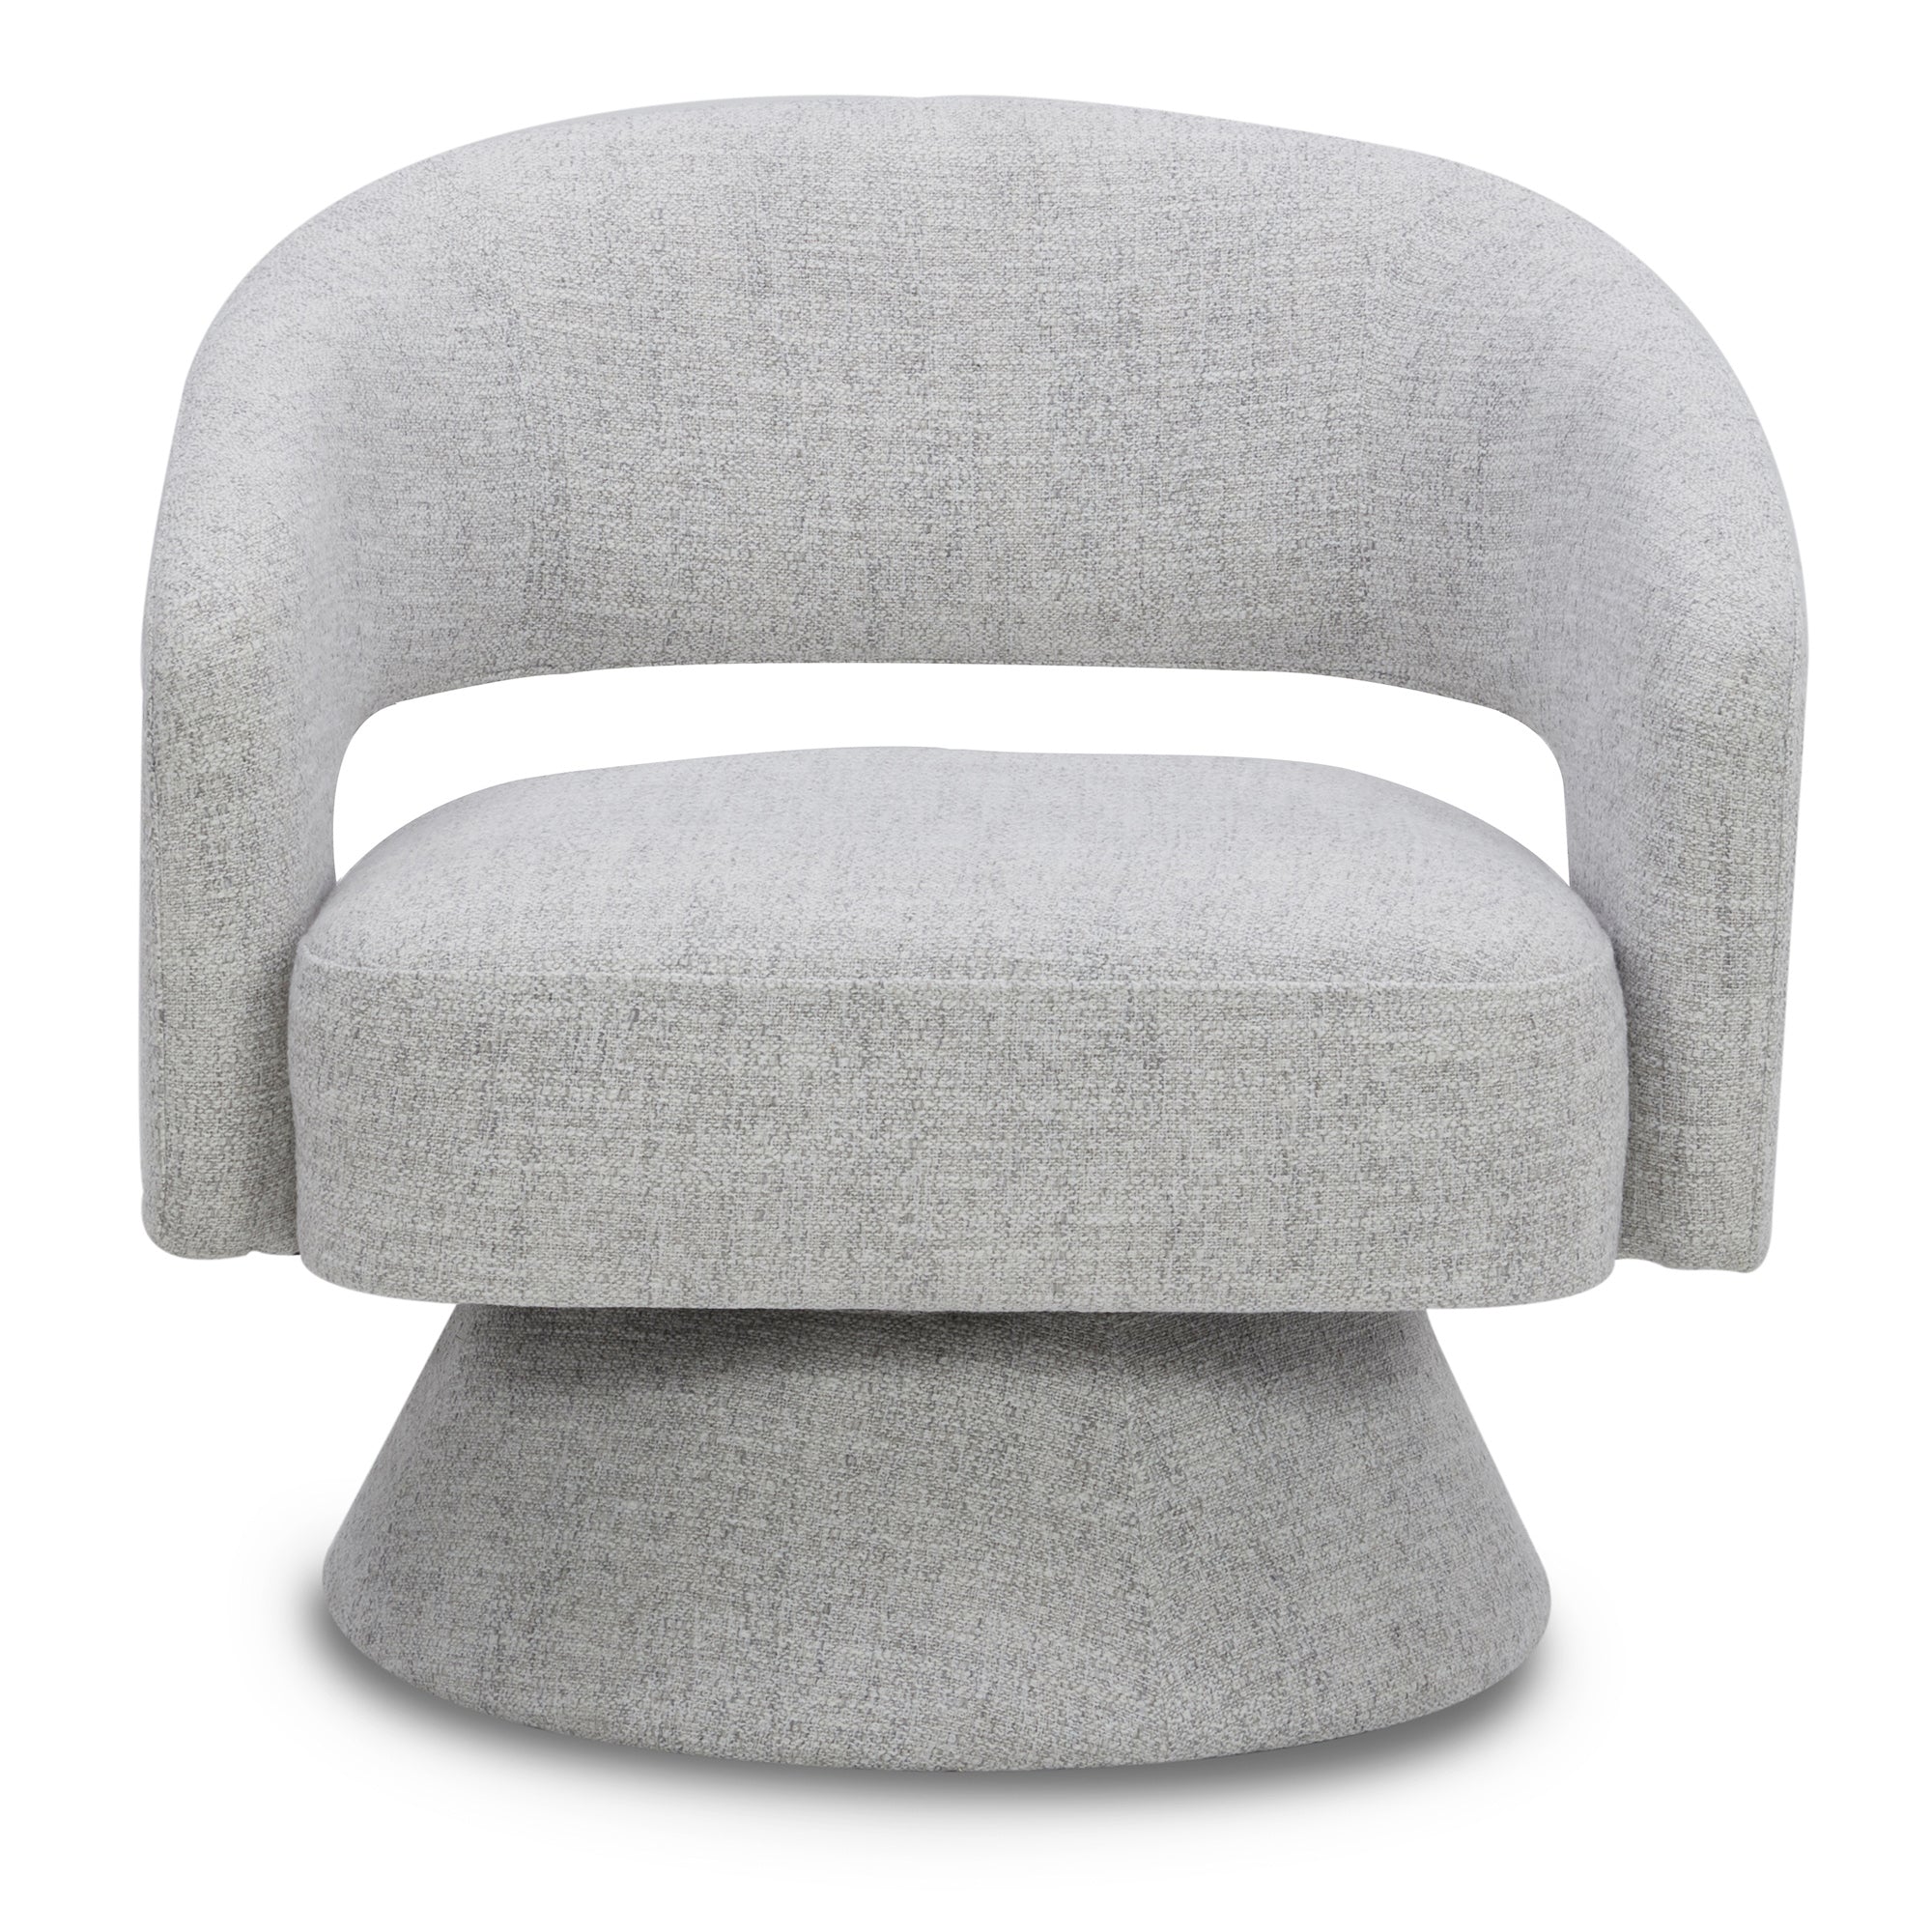 CHITA LIVING-Ambre Swivel Accent Chair-Accent Chair-Fabric-White (Multi-Colored)-